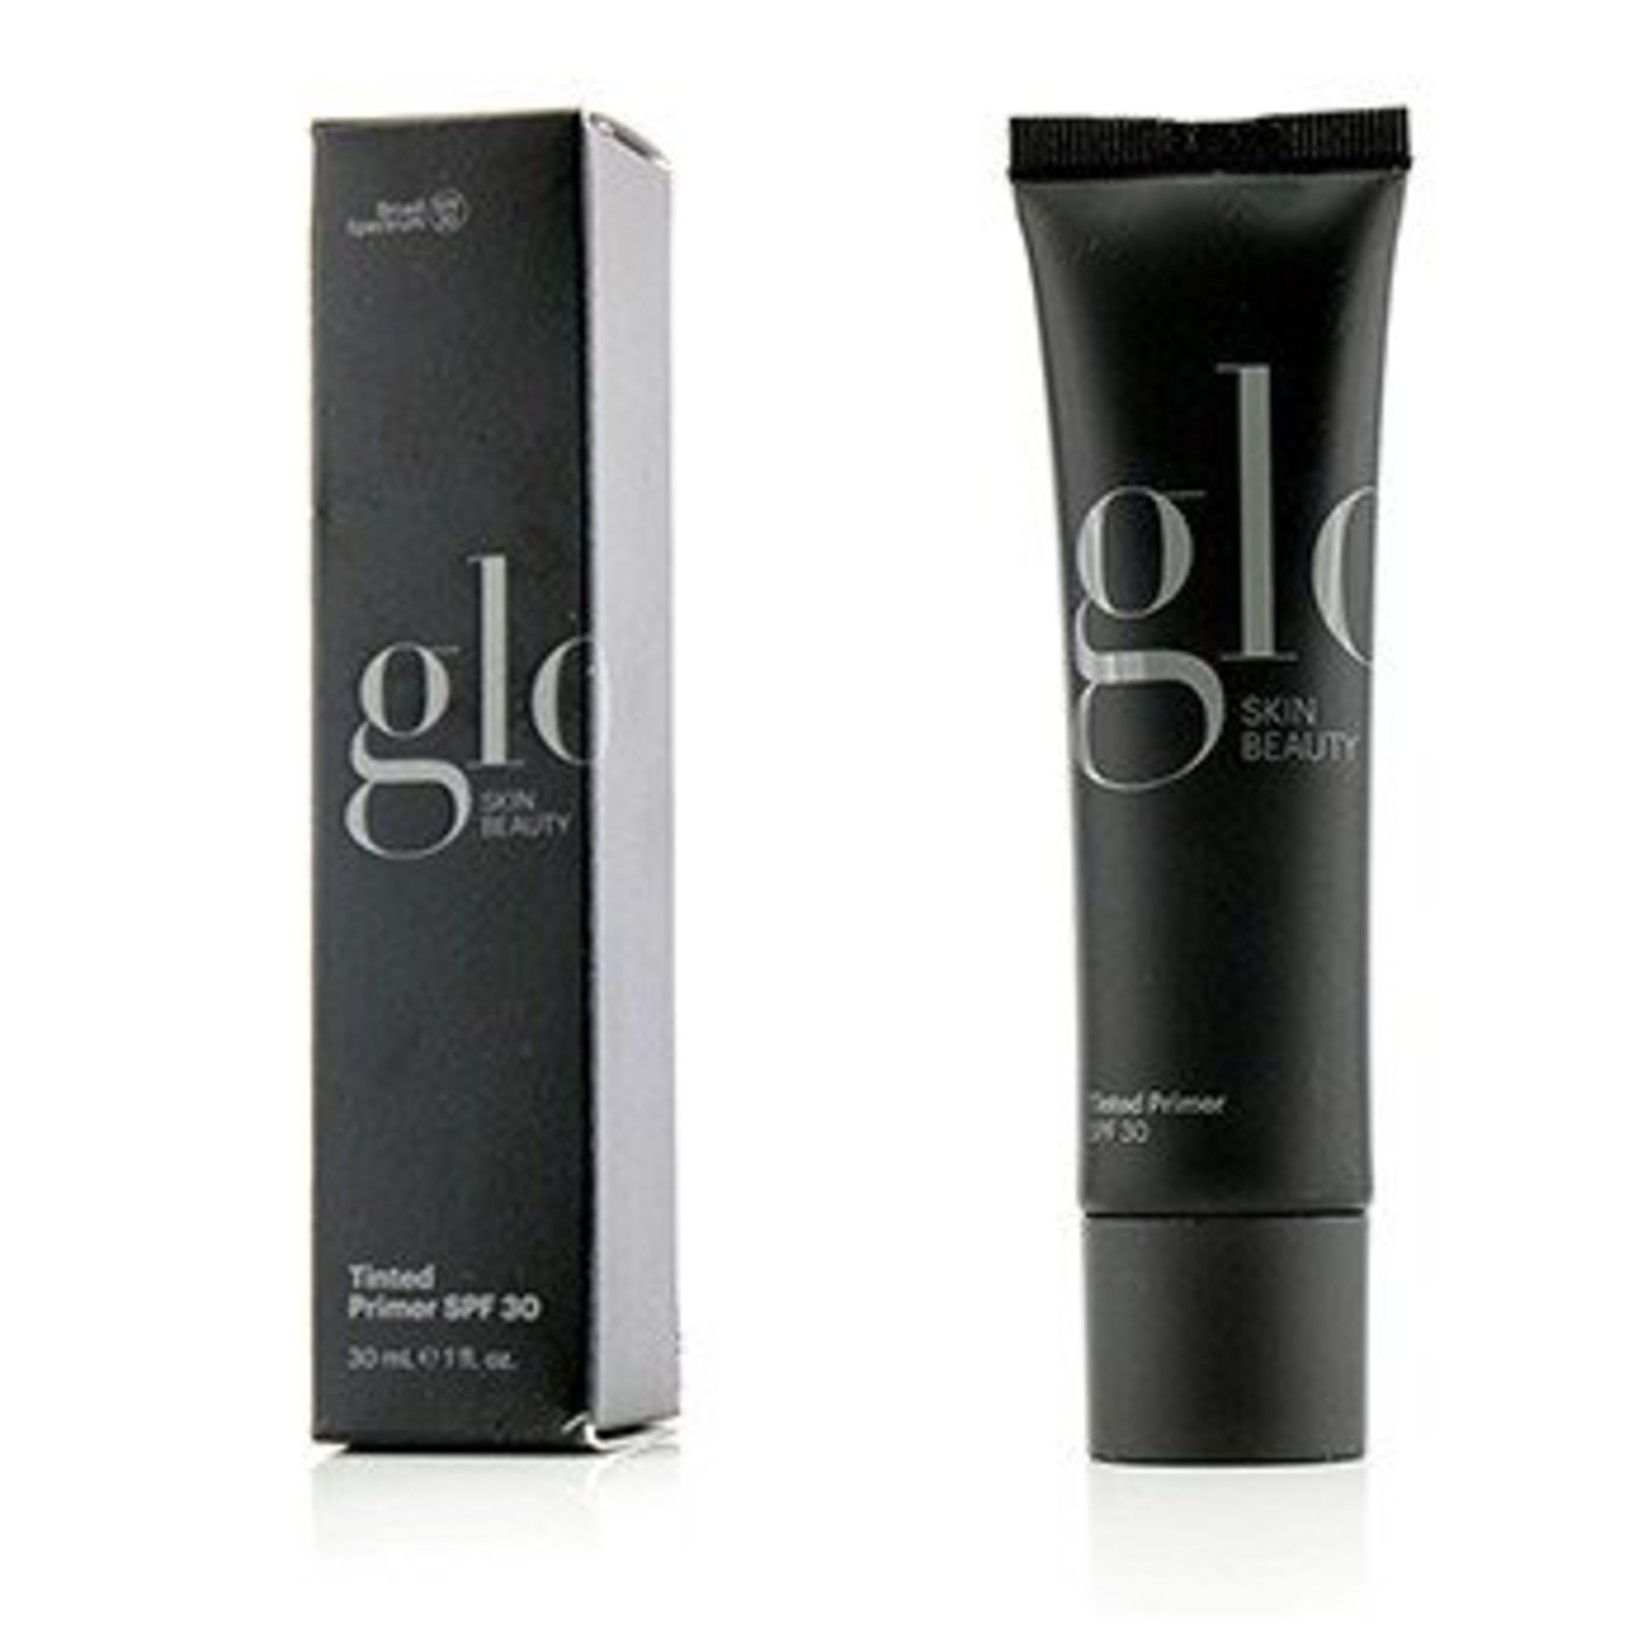 Glo Skin Beauty Tinted Primer SPF 30 1 oz.- Medium